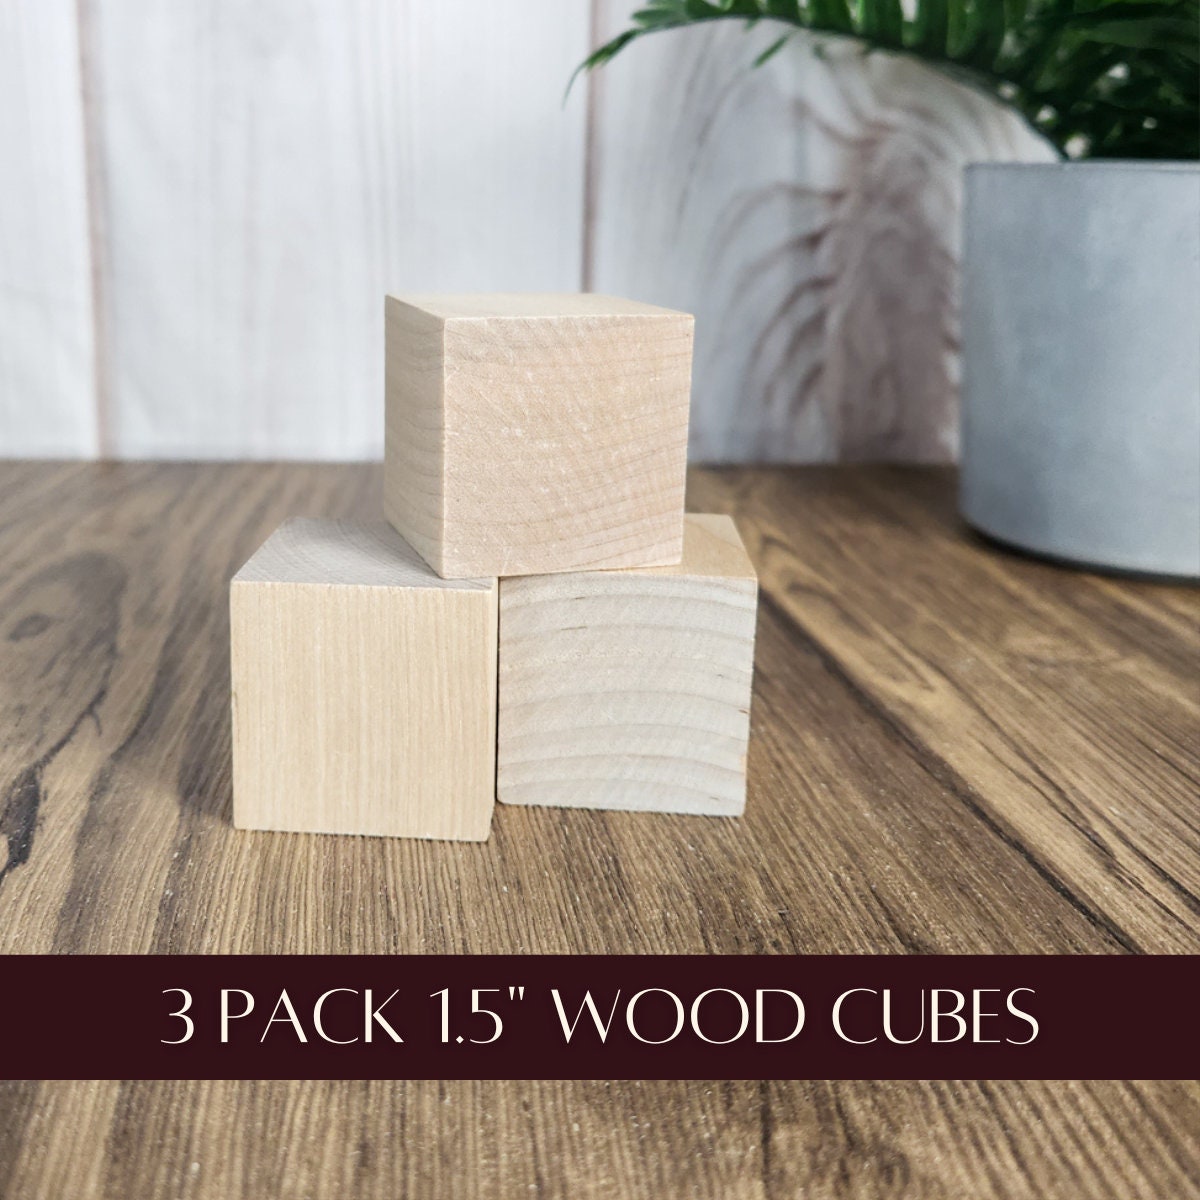 Wood Blocks for Crafts, 1.5 Inch Wood Craft Block, Crafting Blocks